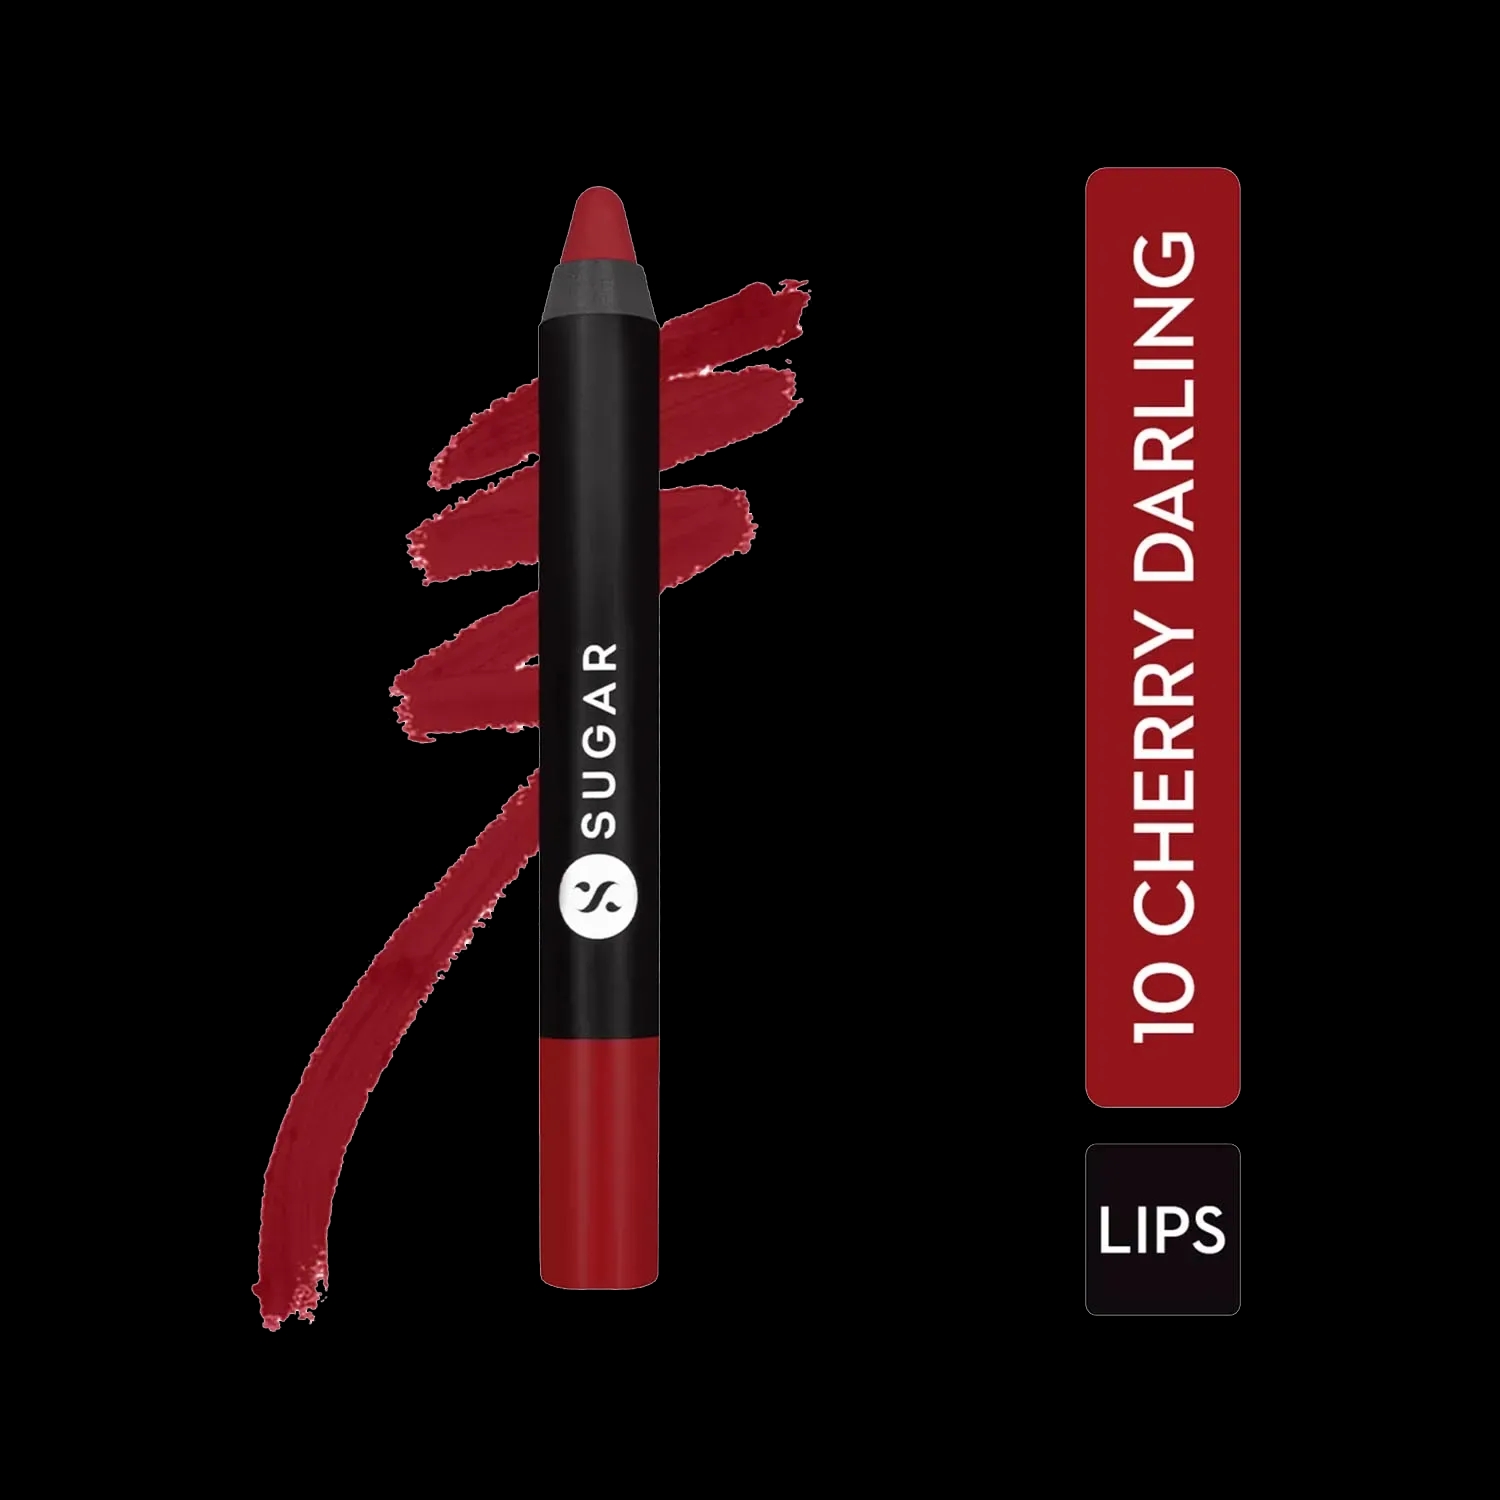 SUGAR Cosmetics Matte As Hell Crayon Lipstick - 10 Cherry Darling (Cherry Red) (2.8g)